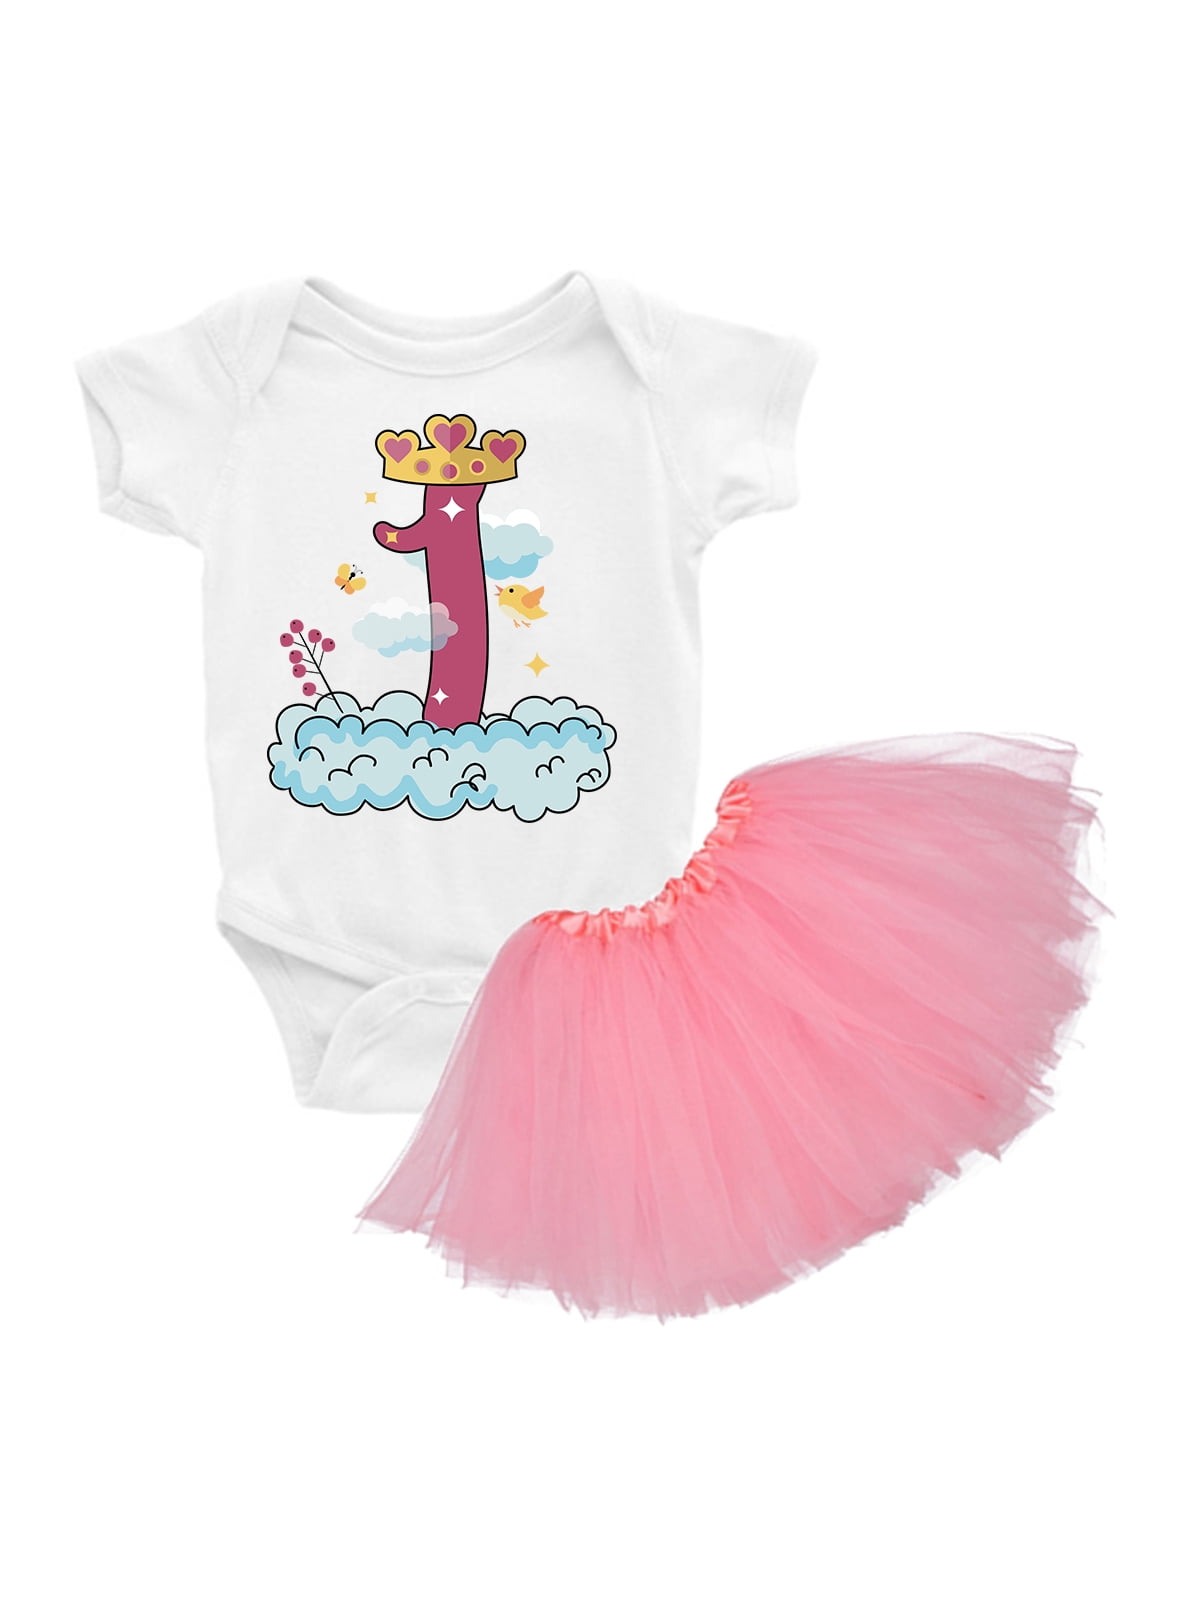 Princess Party Princess Shirt Baby Girl Princess Birthday Girls Birthday Shirt Girl Birthday Outfit Princess Outfit Princess Dress